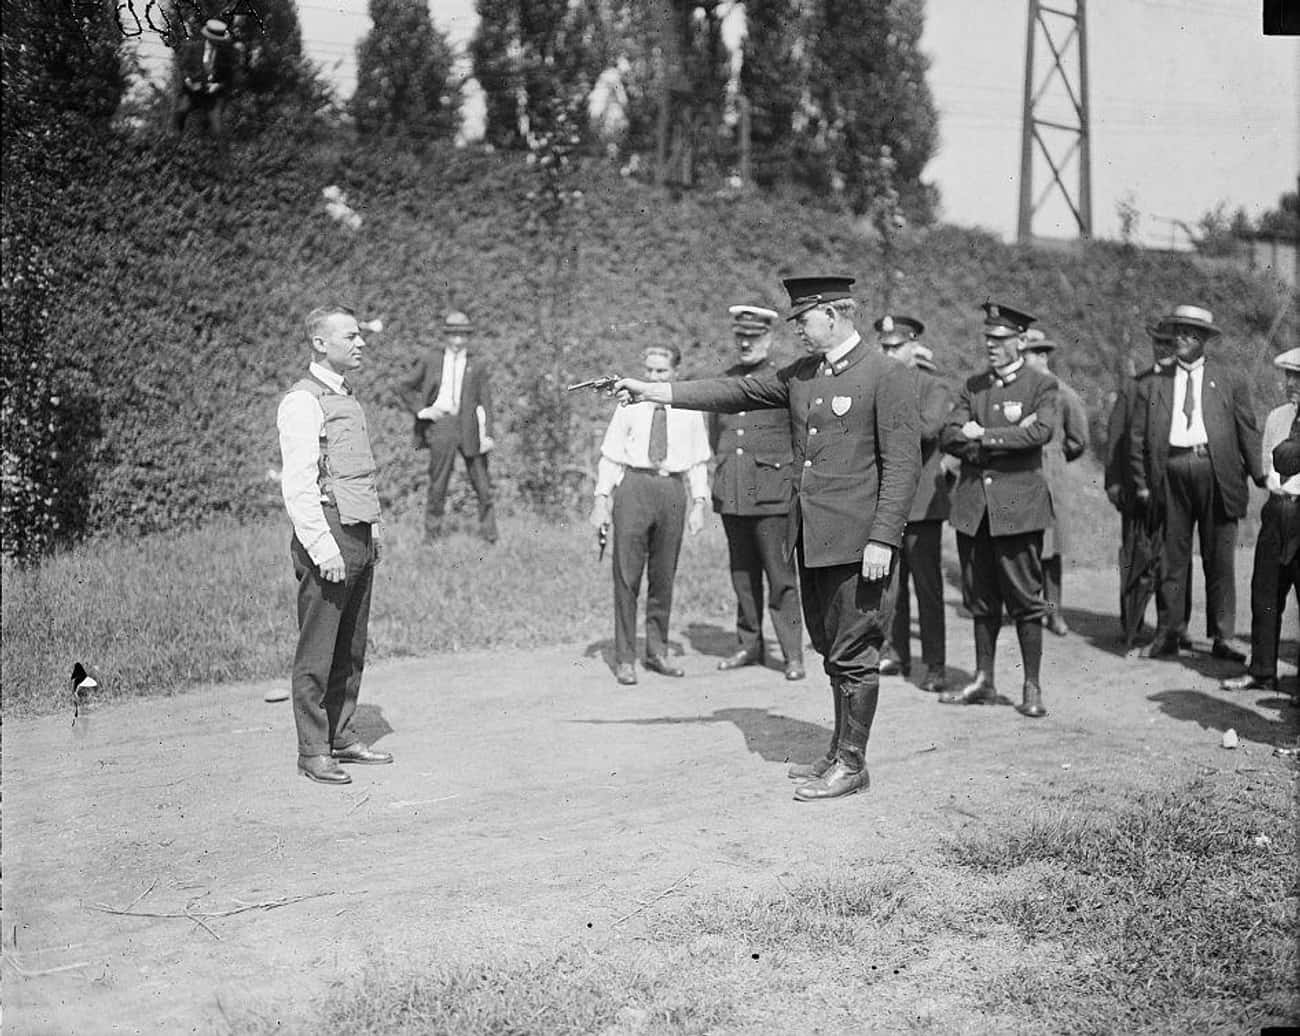 1923 - Two Men Test A Bulletproof Vest